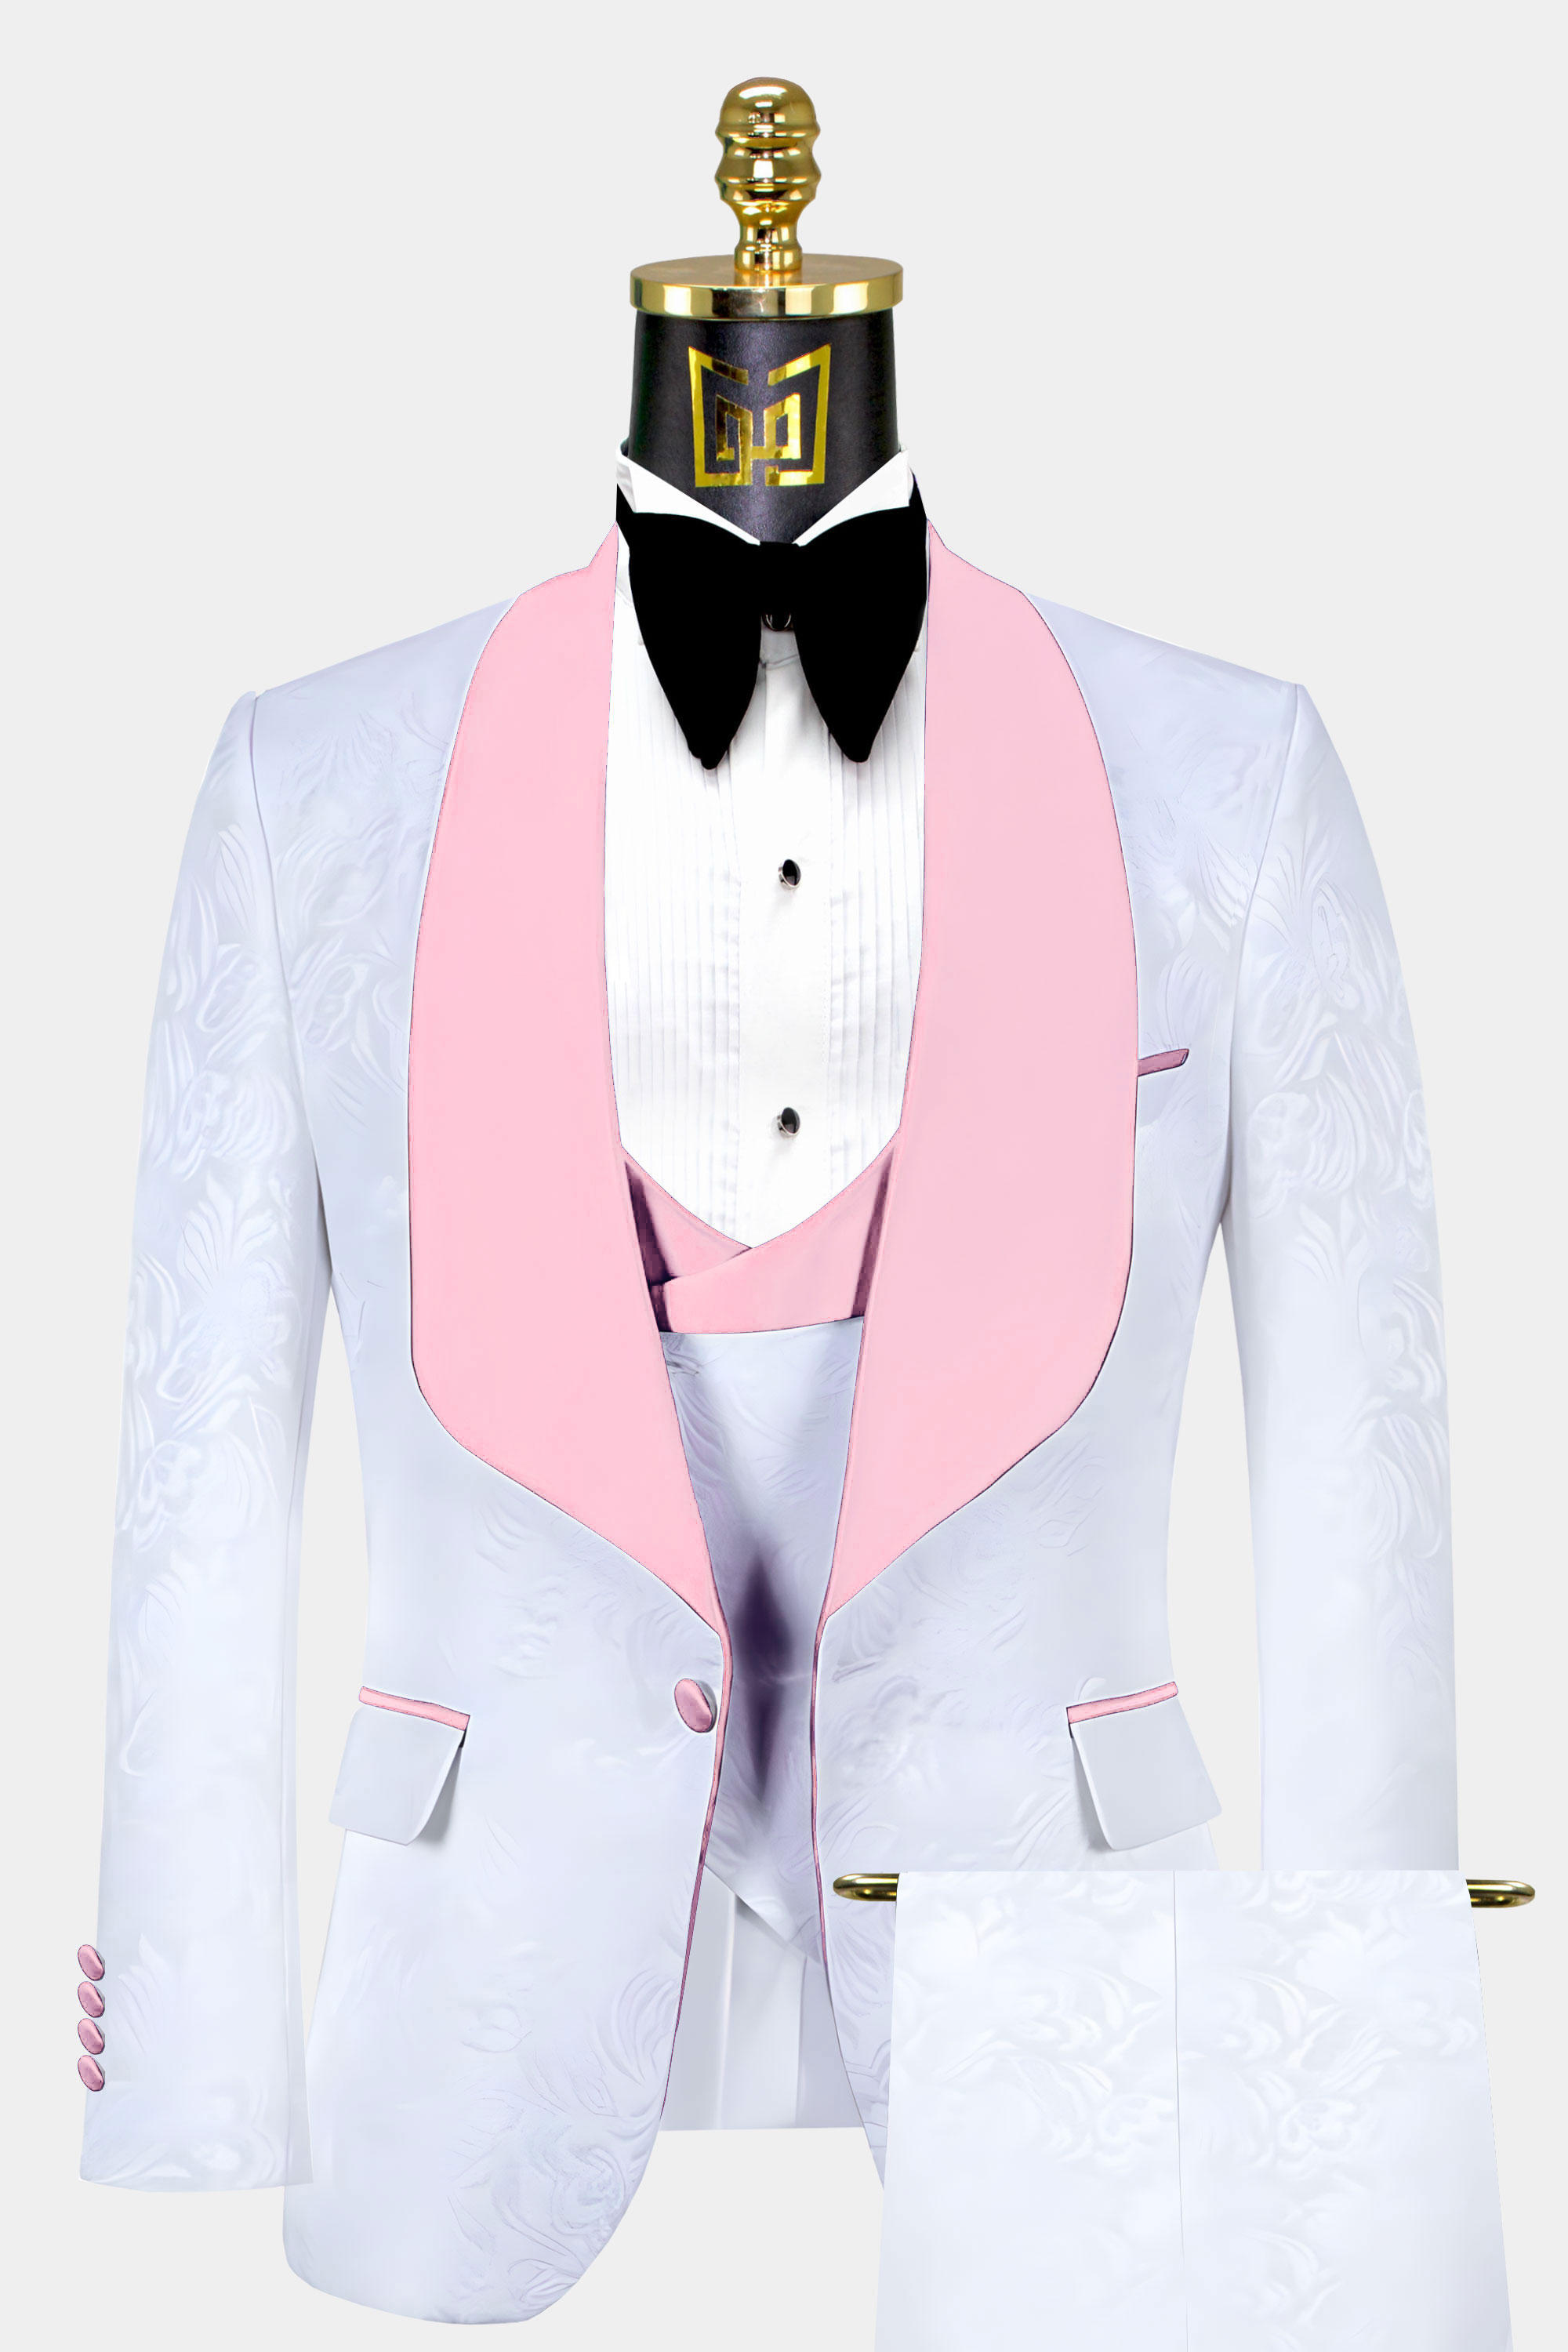 White-and-Light-Pink-Tuxedo-Groom-Wedding-Prom-Suit-For-Men-from-Gentlemansguru.com